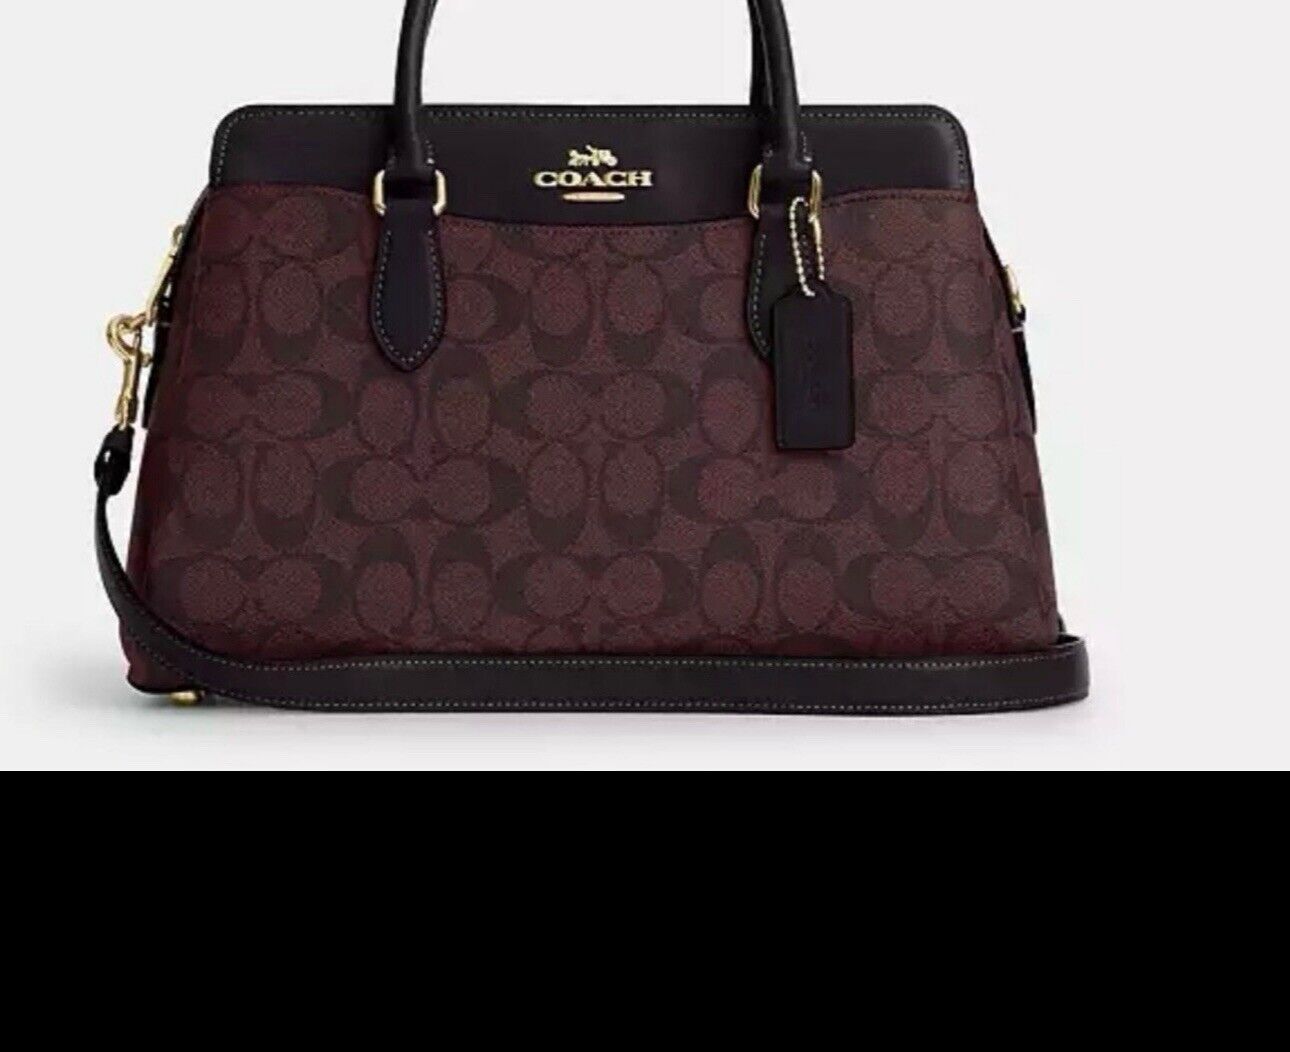 new coach handbags large leather purse